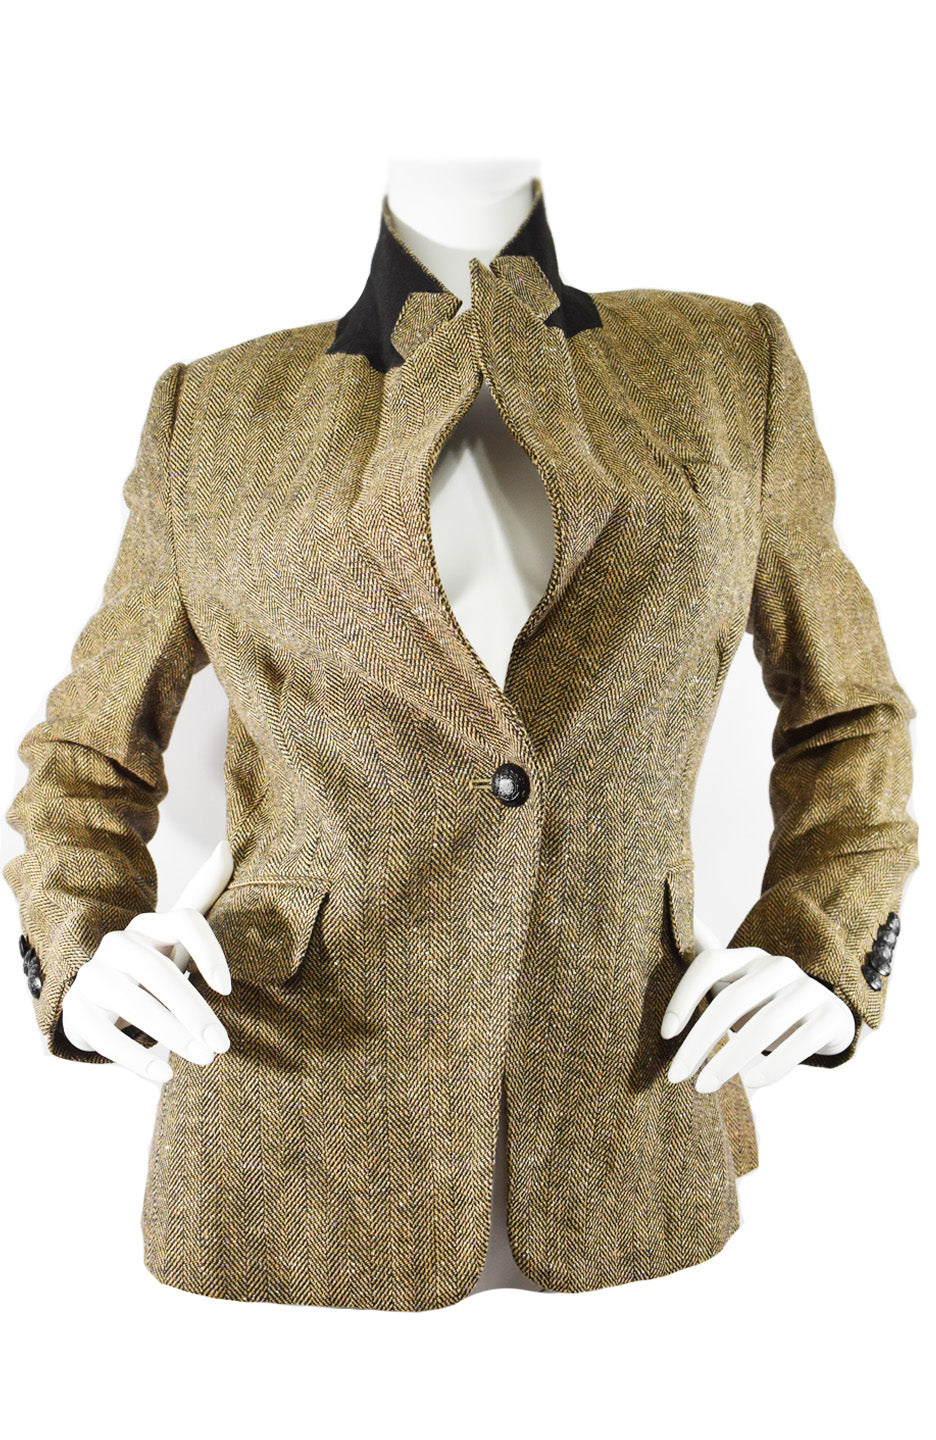 Court & Rowe Herringbone Tweed Blazer - Size 6